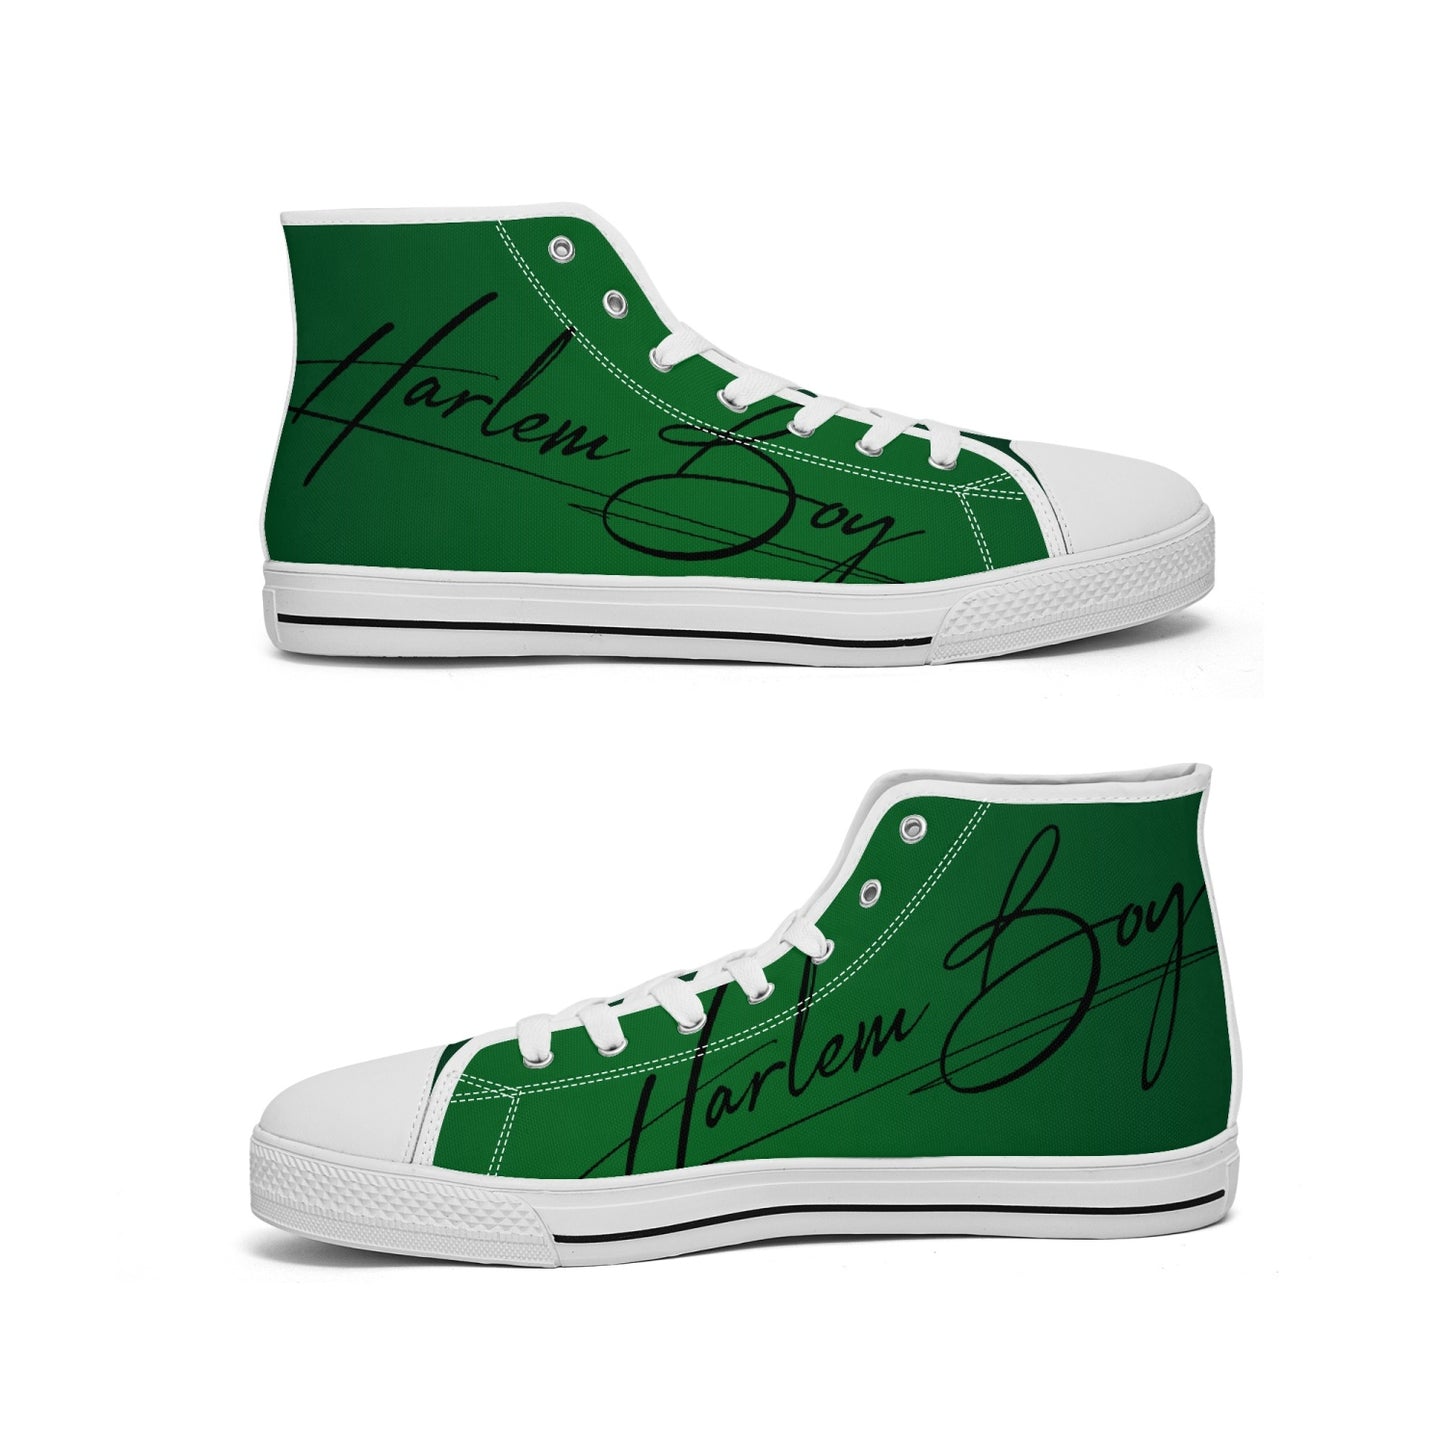 Harlem Boy "Lenox Ave" Unisex Classic High Tops - Emerald (Black or White Sole)